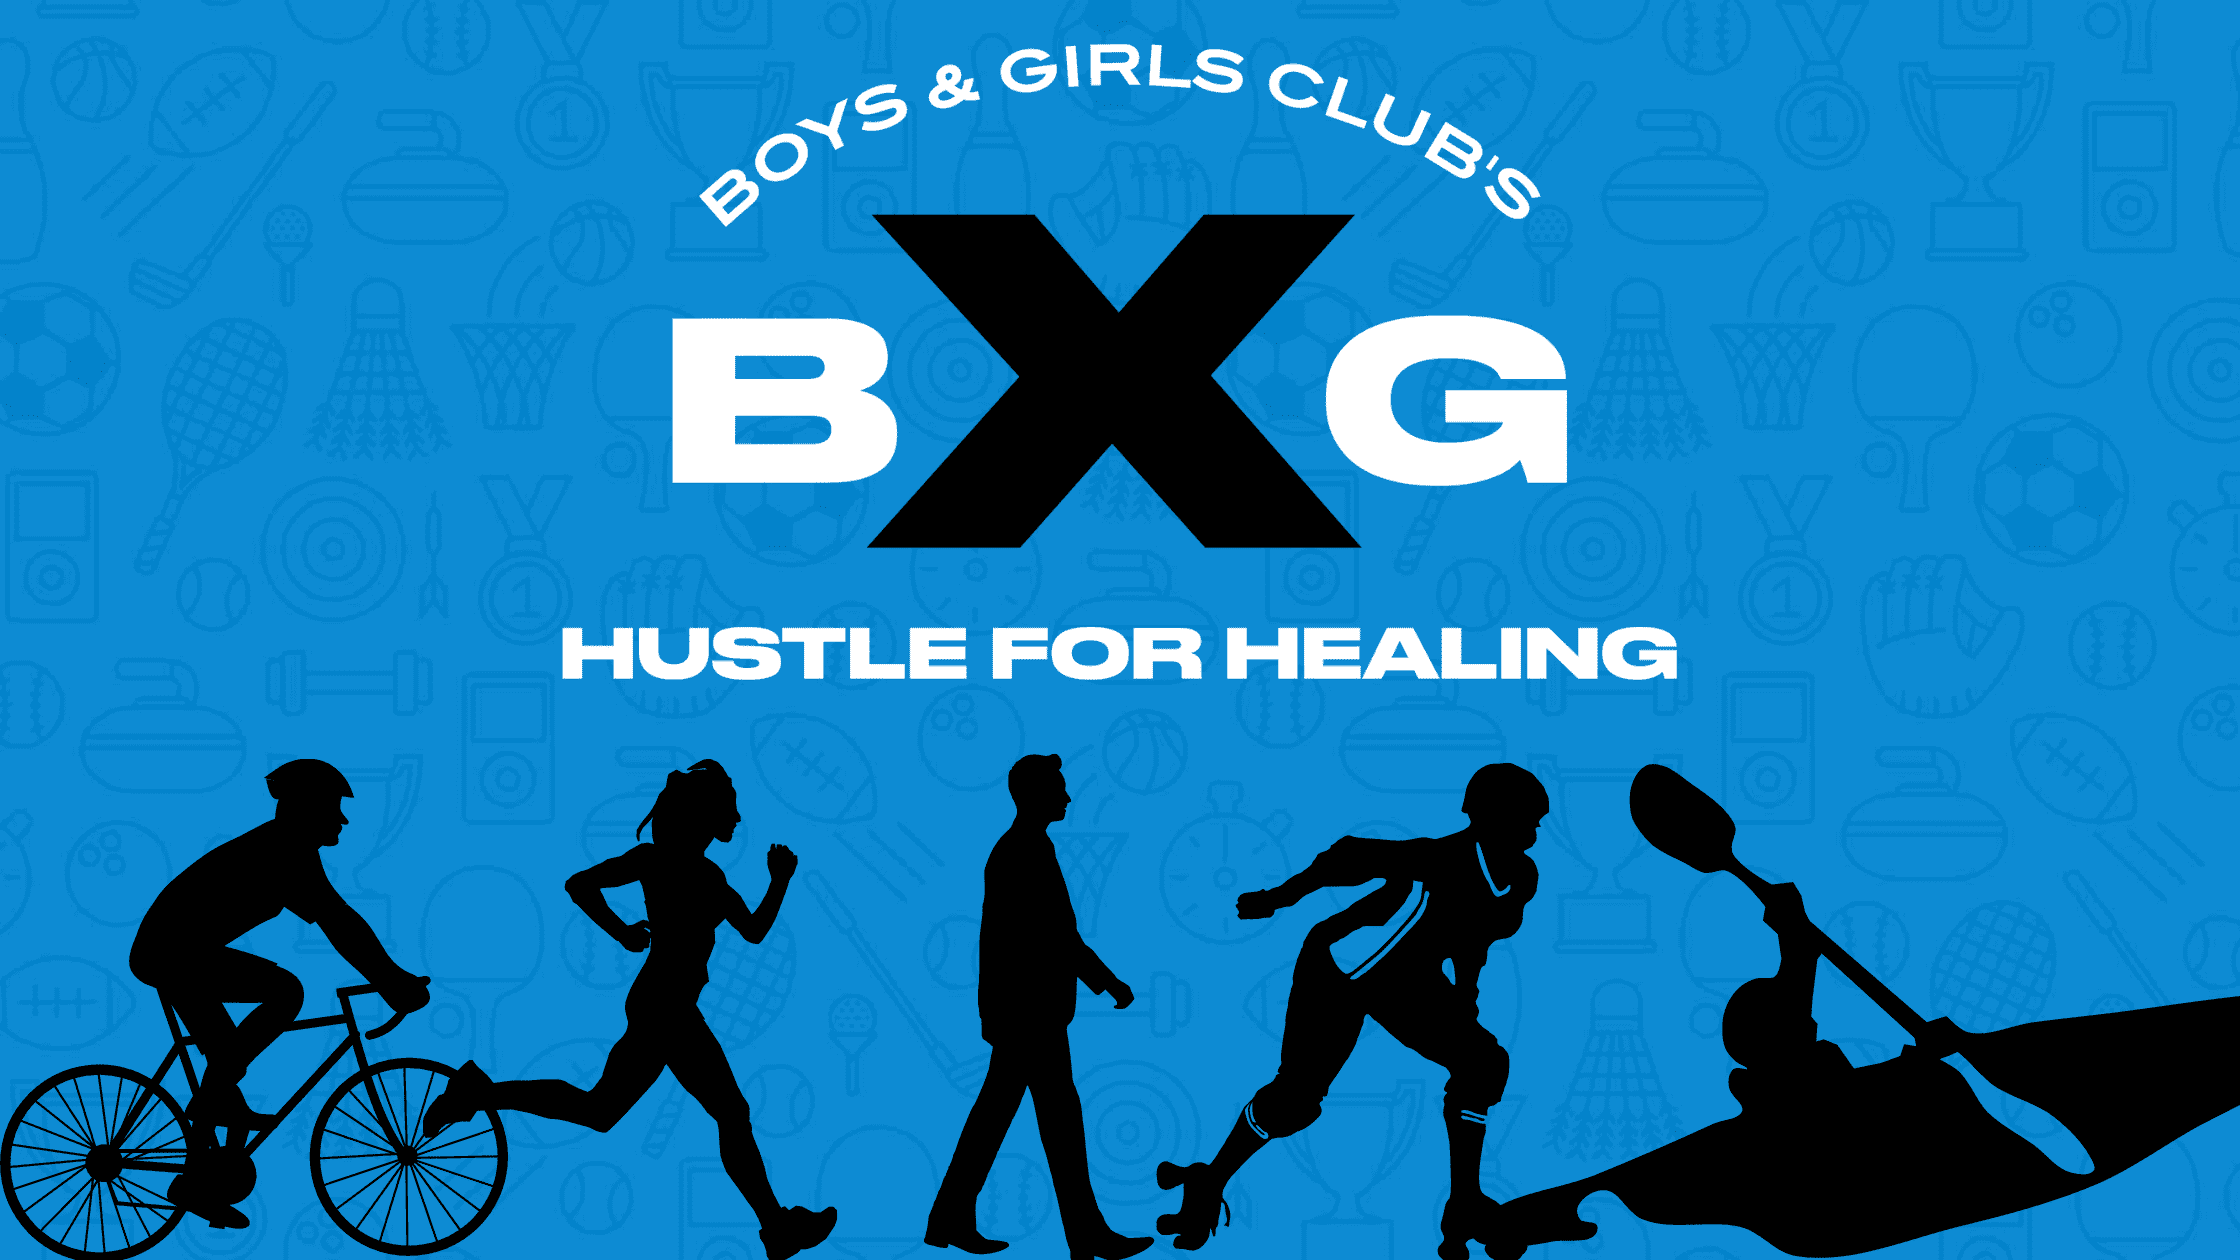 BGCM Hustle for Healing Featuring Sports Activities